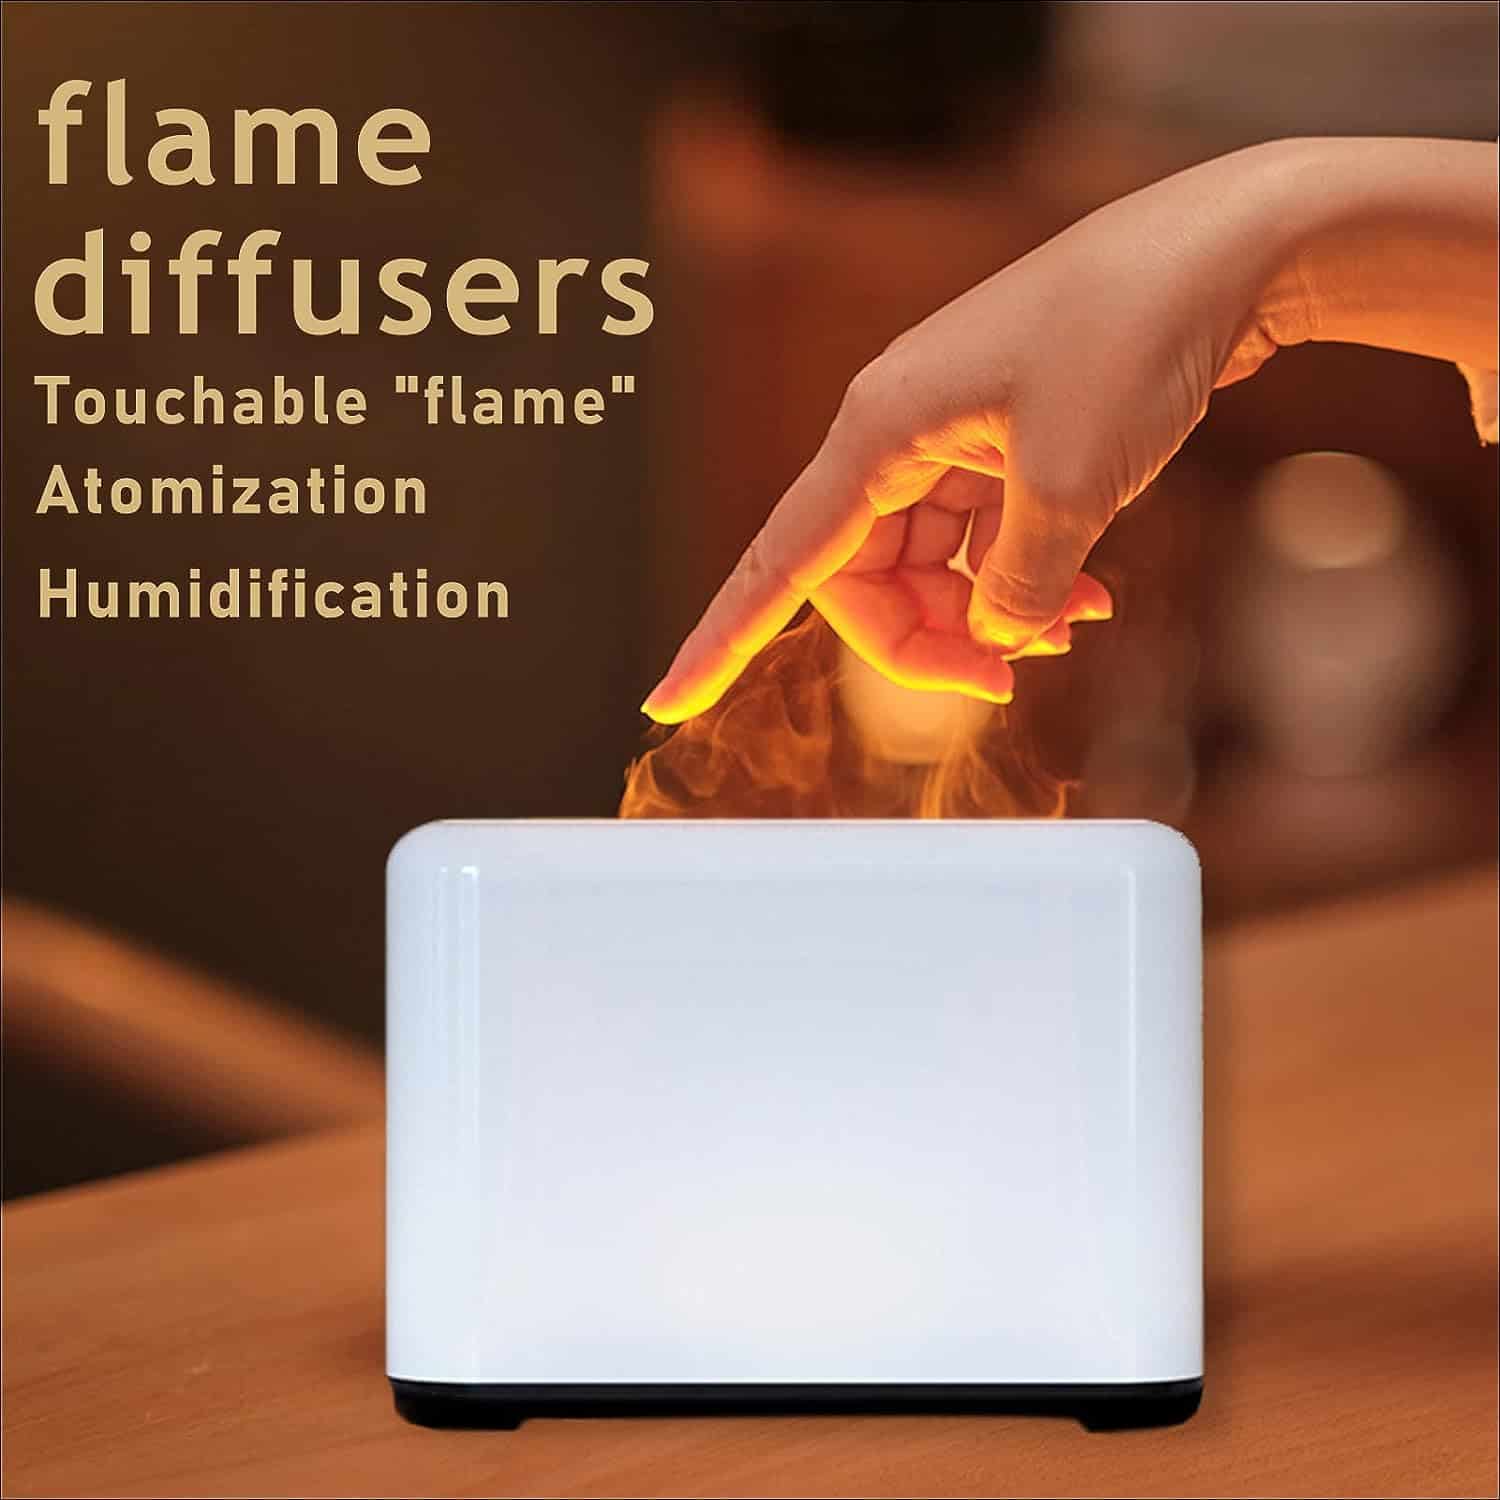 Macove Flame Air Diffuser Review